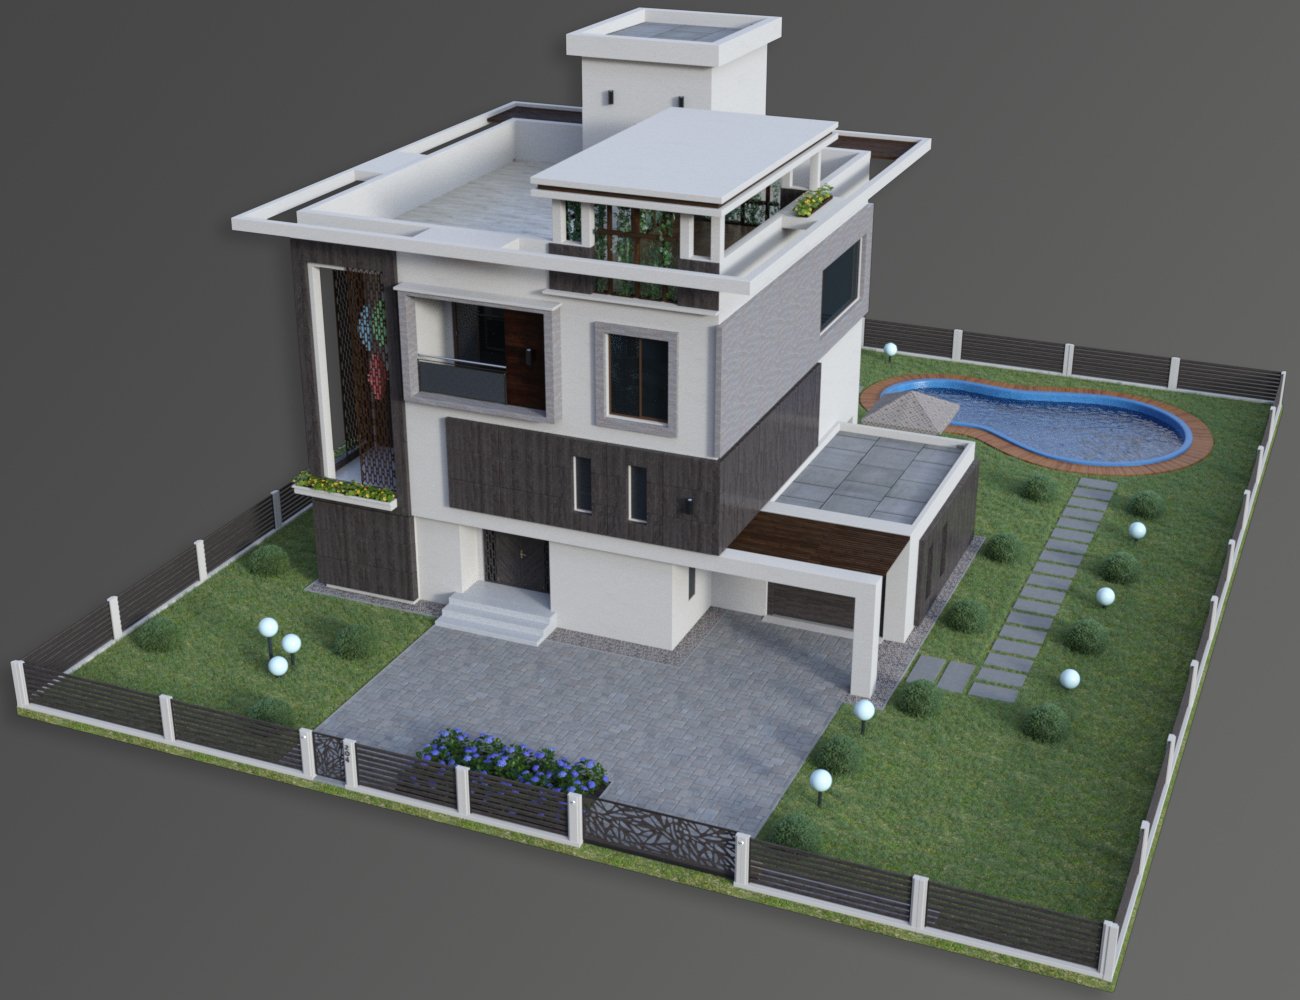 Modern House 3 by: petipet, 3D Models by Daz 3D